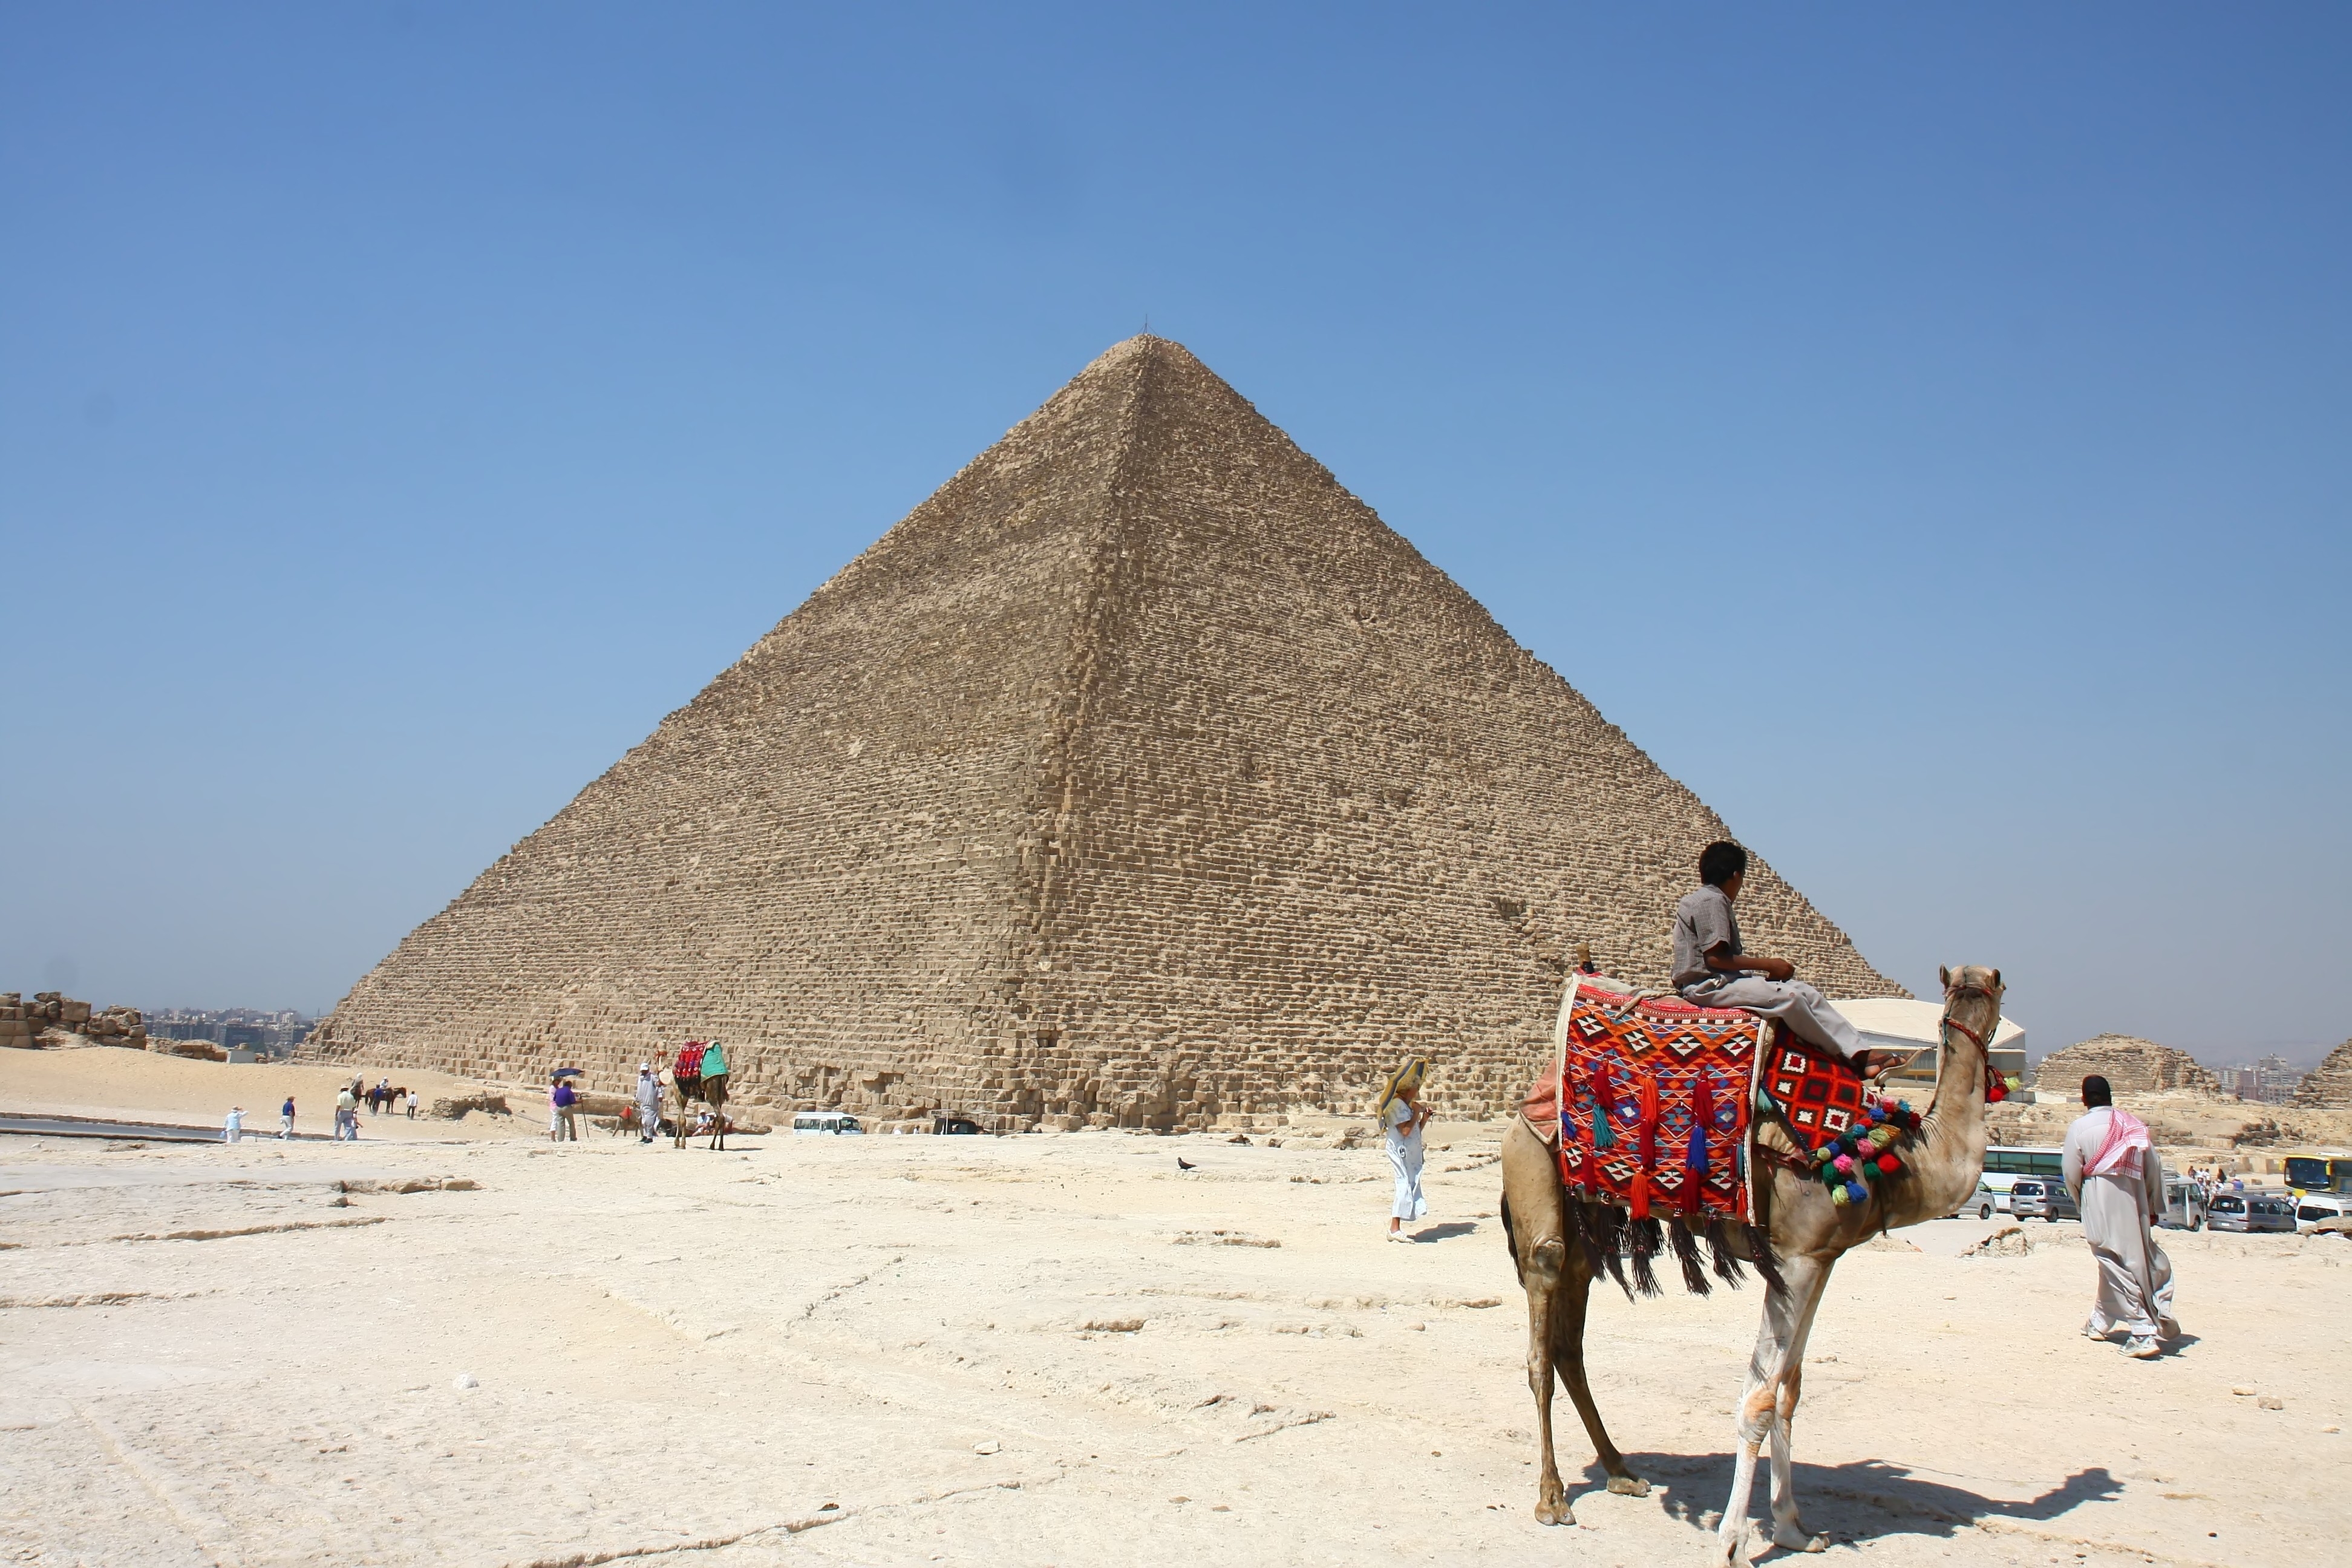 Large Pyramid